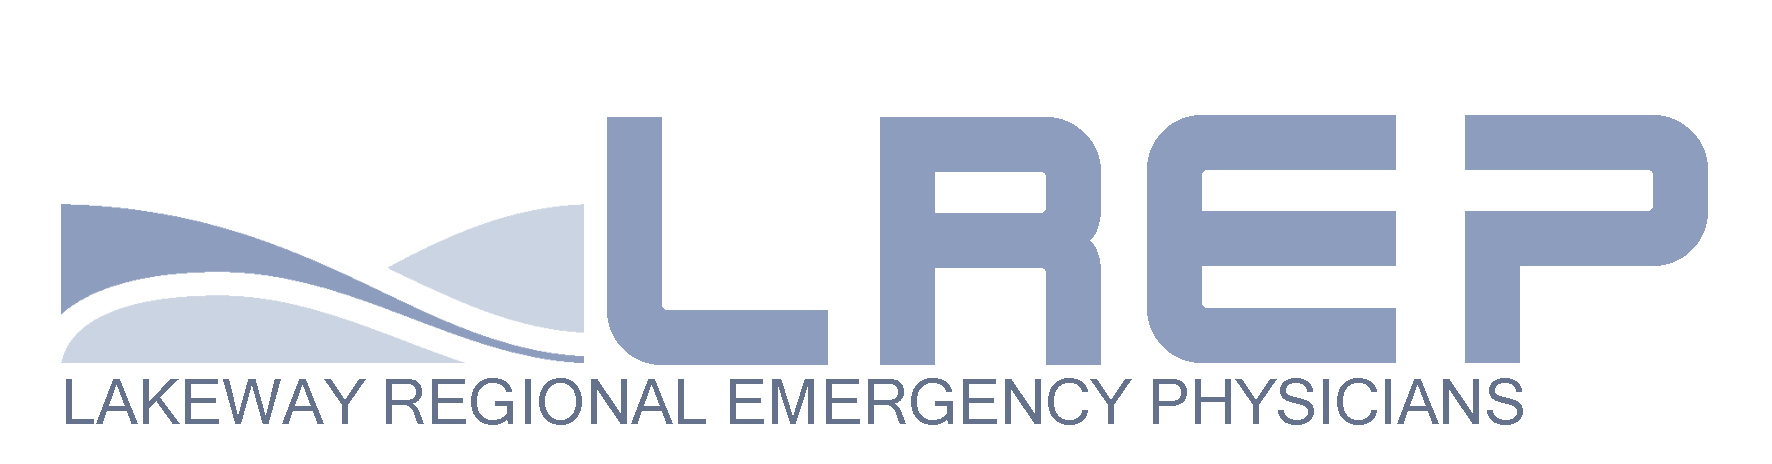 Lakeway Regional Emergency Physicians